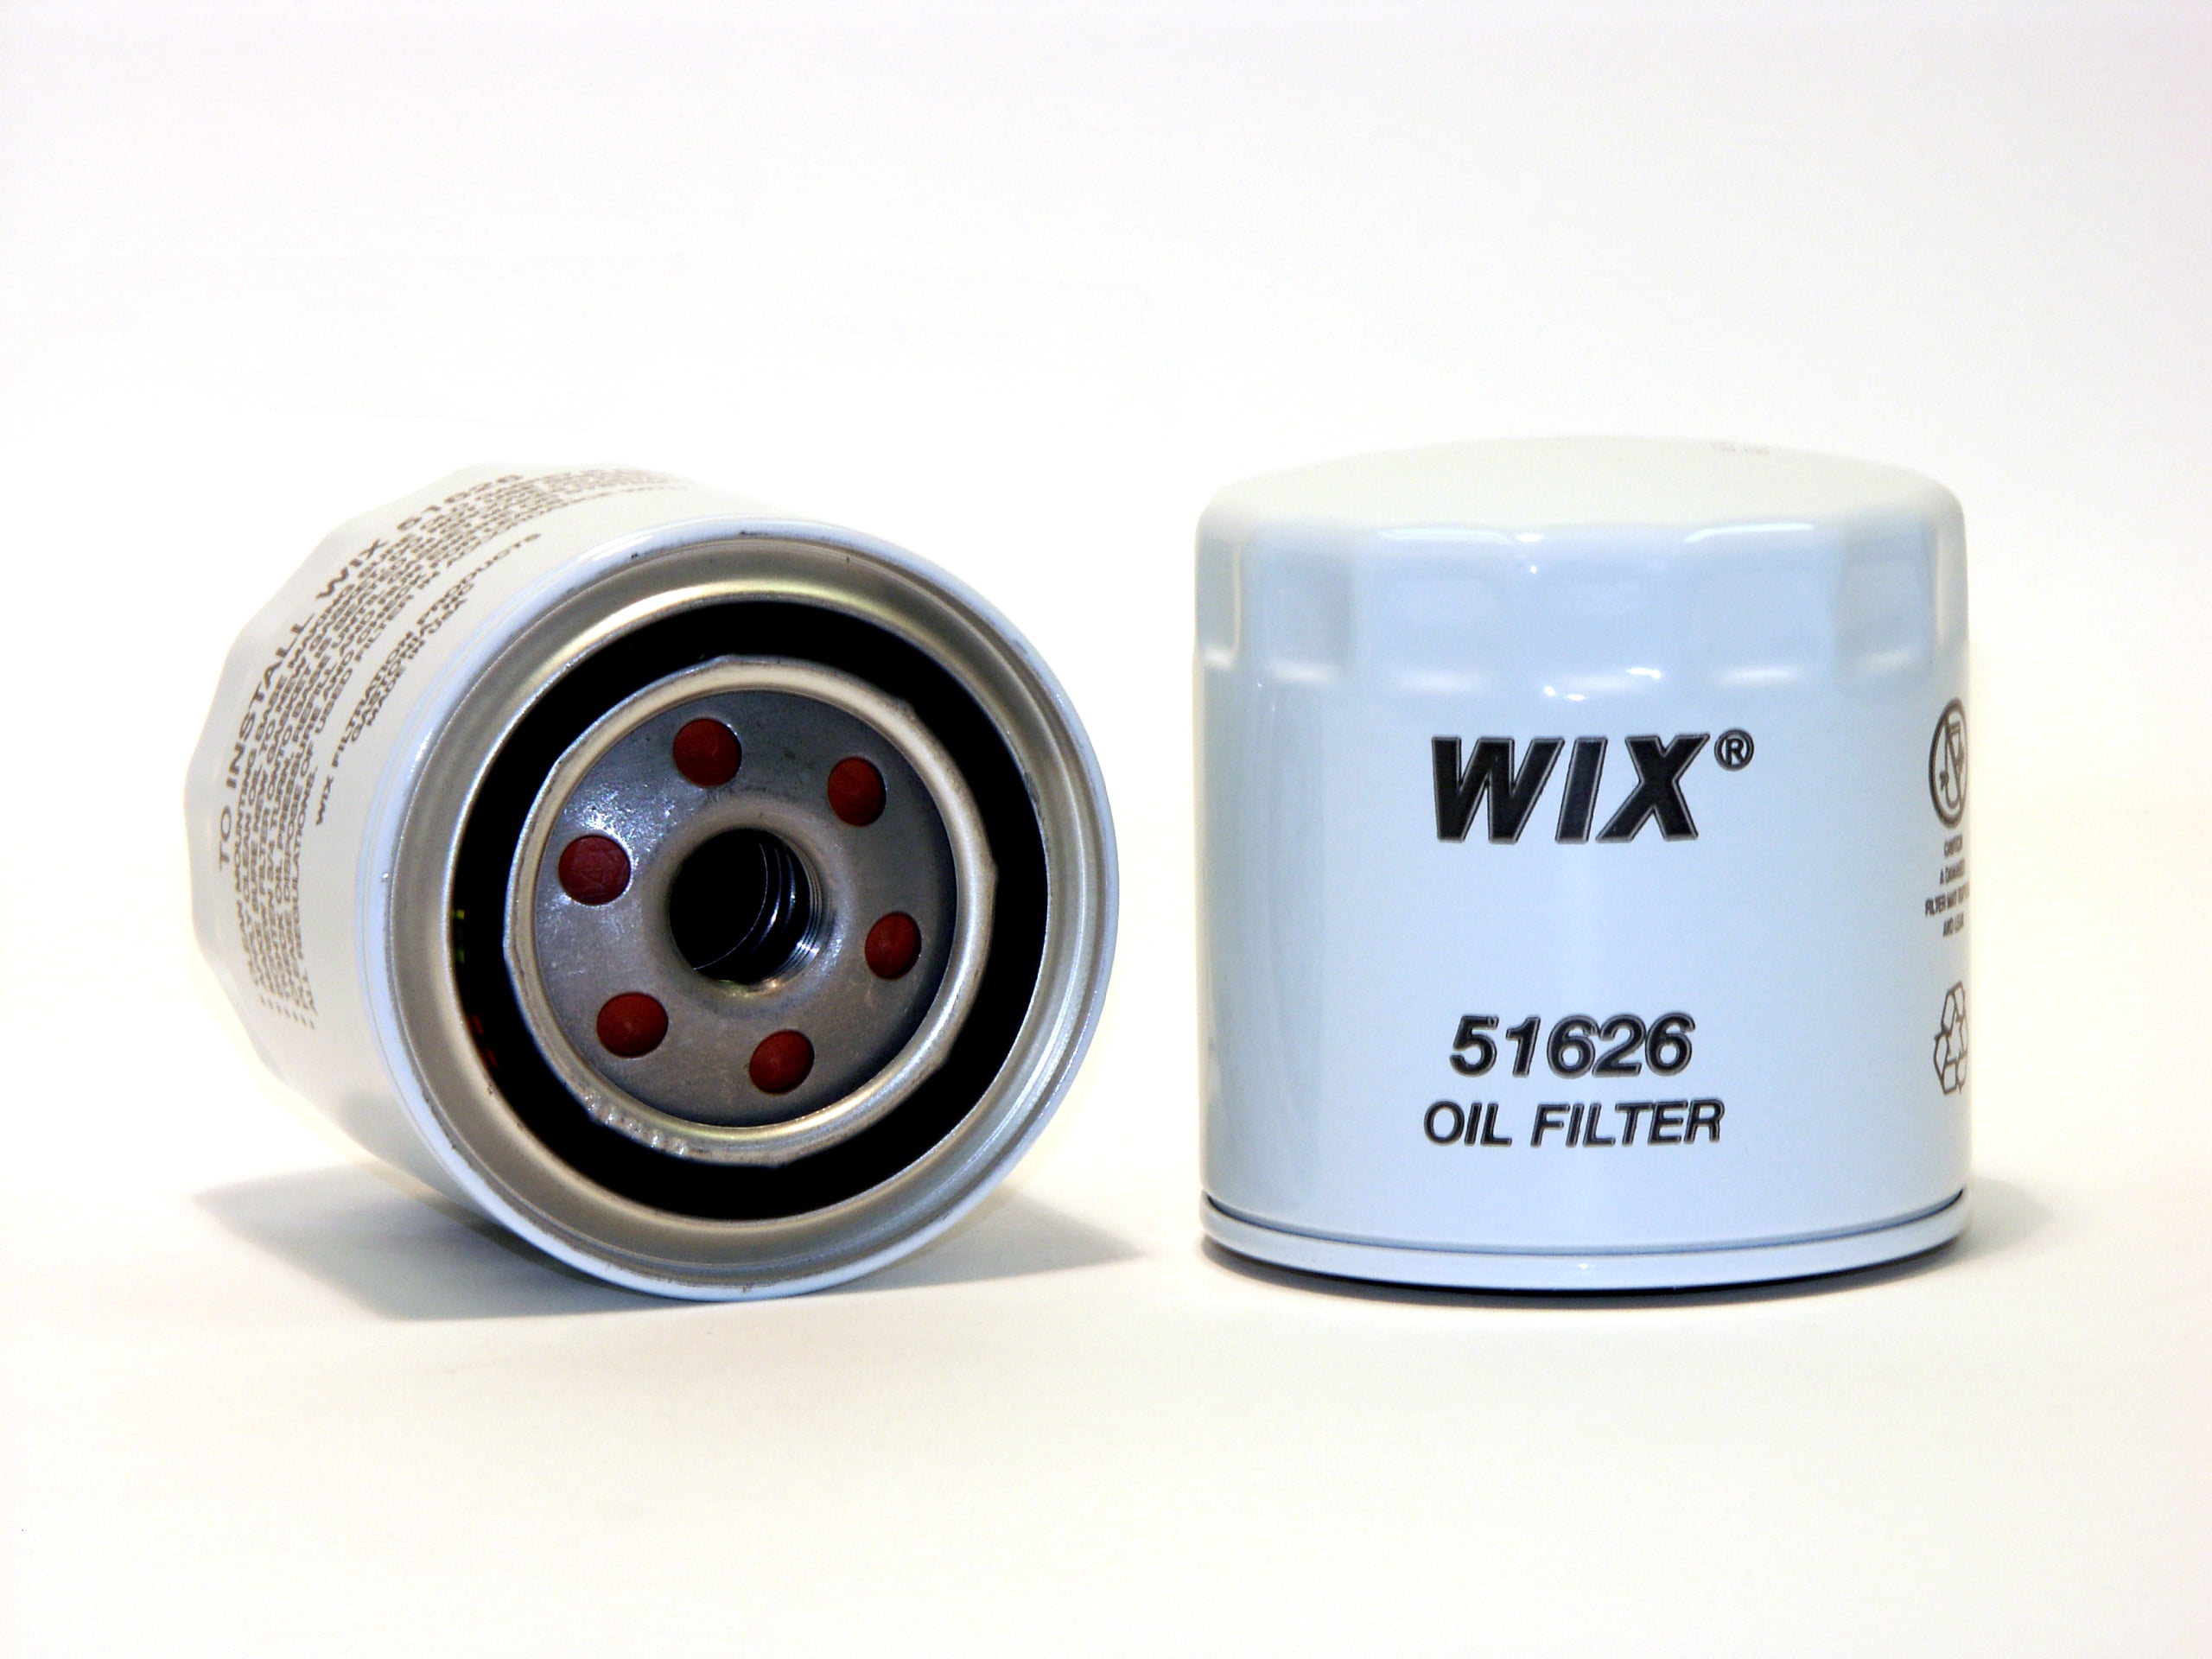 WIX Oil Filter 51626 Fits select: 1989-1990 JEEP WRANGLER YJ, 1987-1988  JEEP WRANGLER